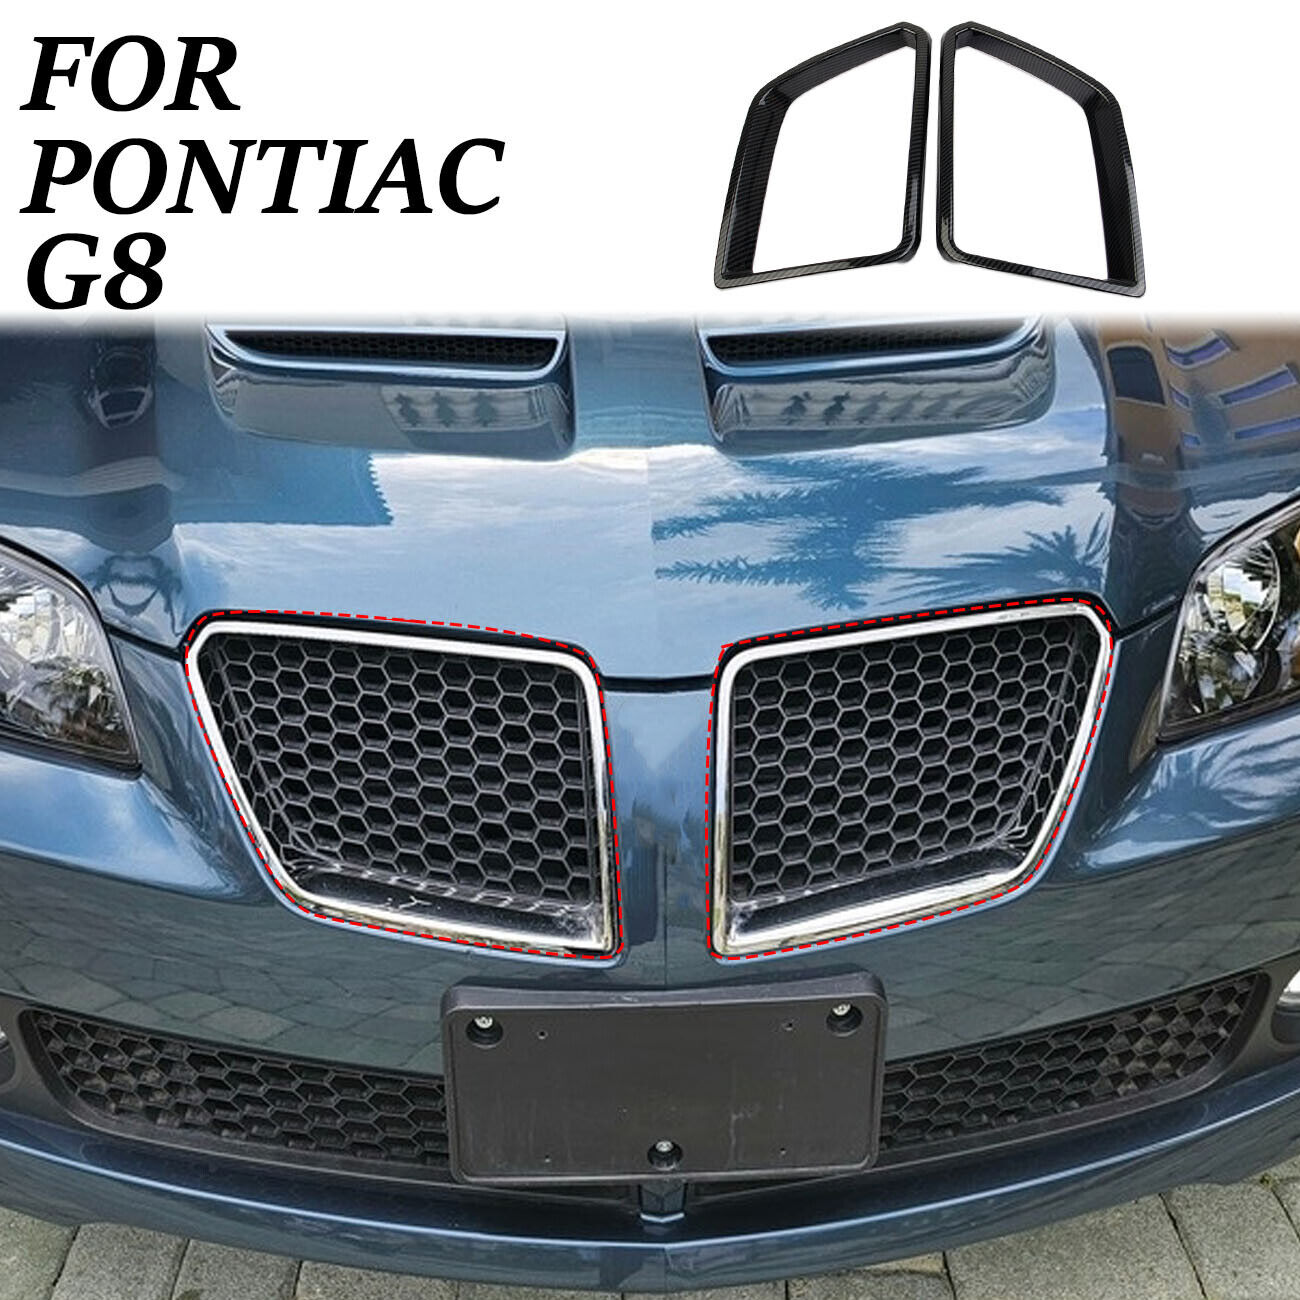 Carbon fiber style exterior front honeycomb grille frame trim For Pontiac G8